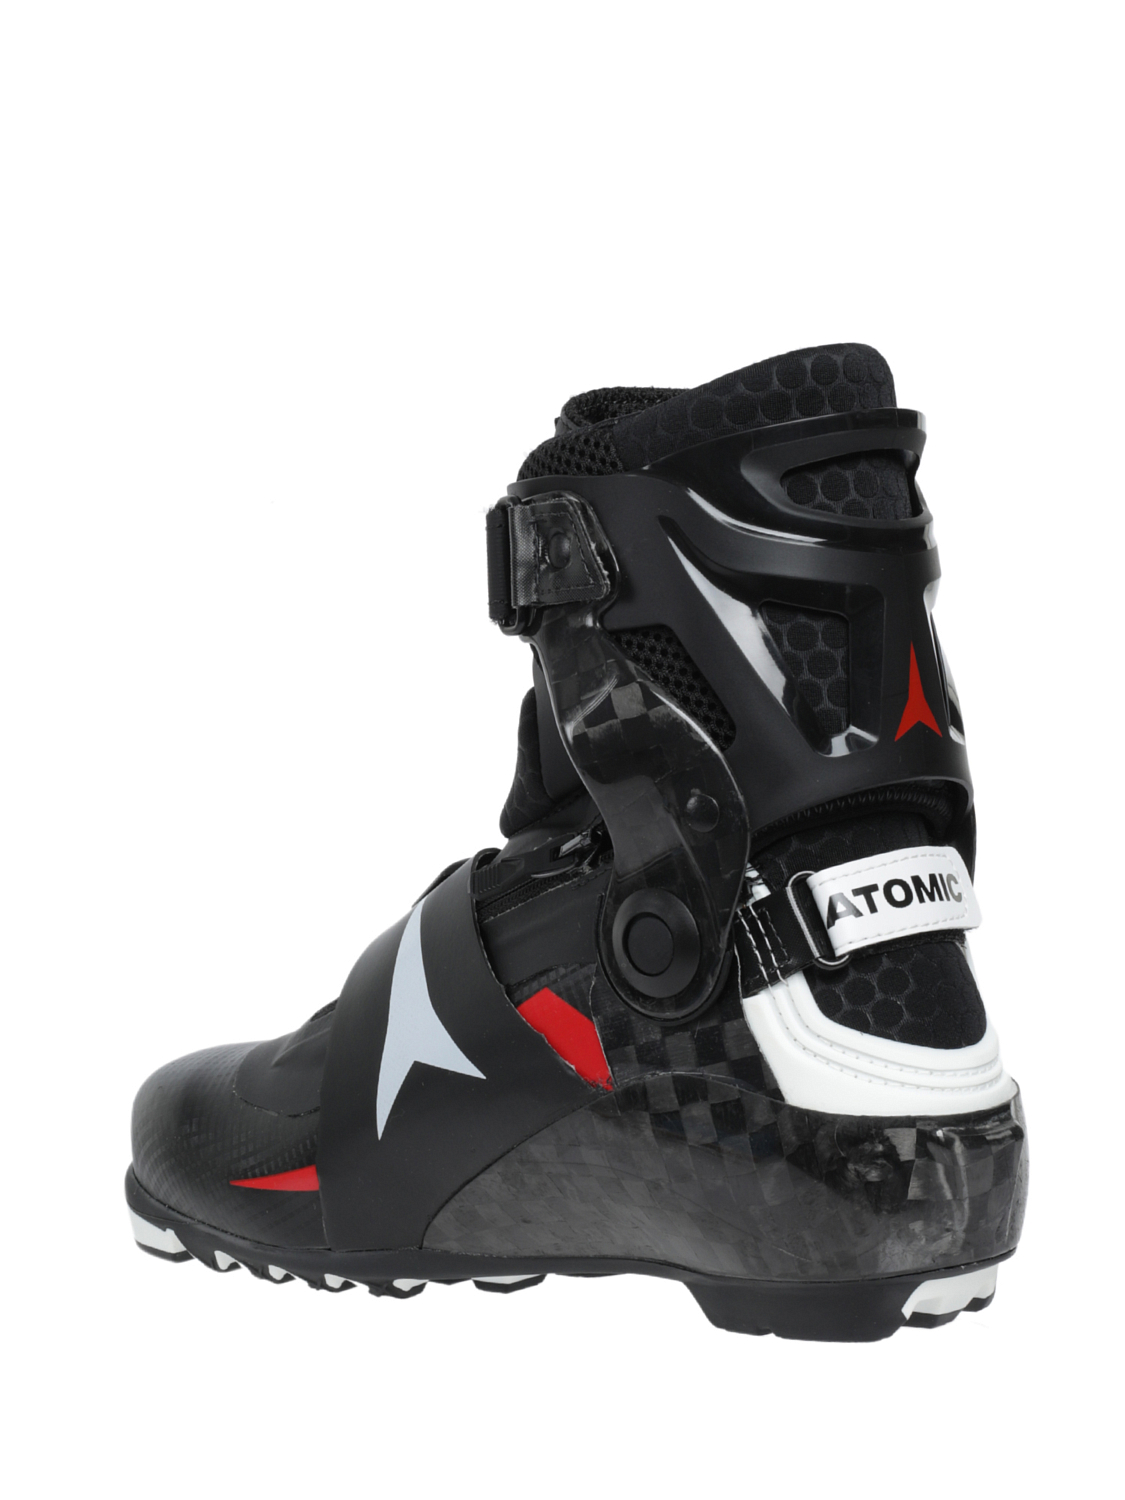 Лыжные ботинки ATOMIC Redster world cup sk prolink Black